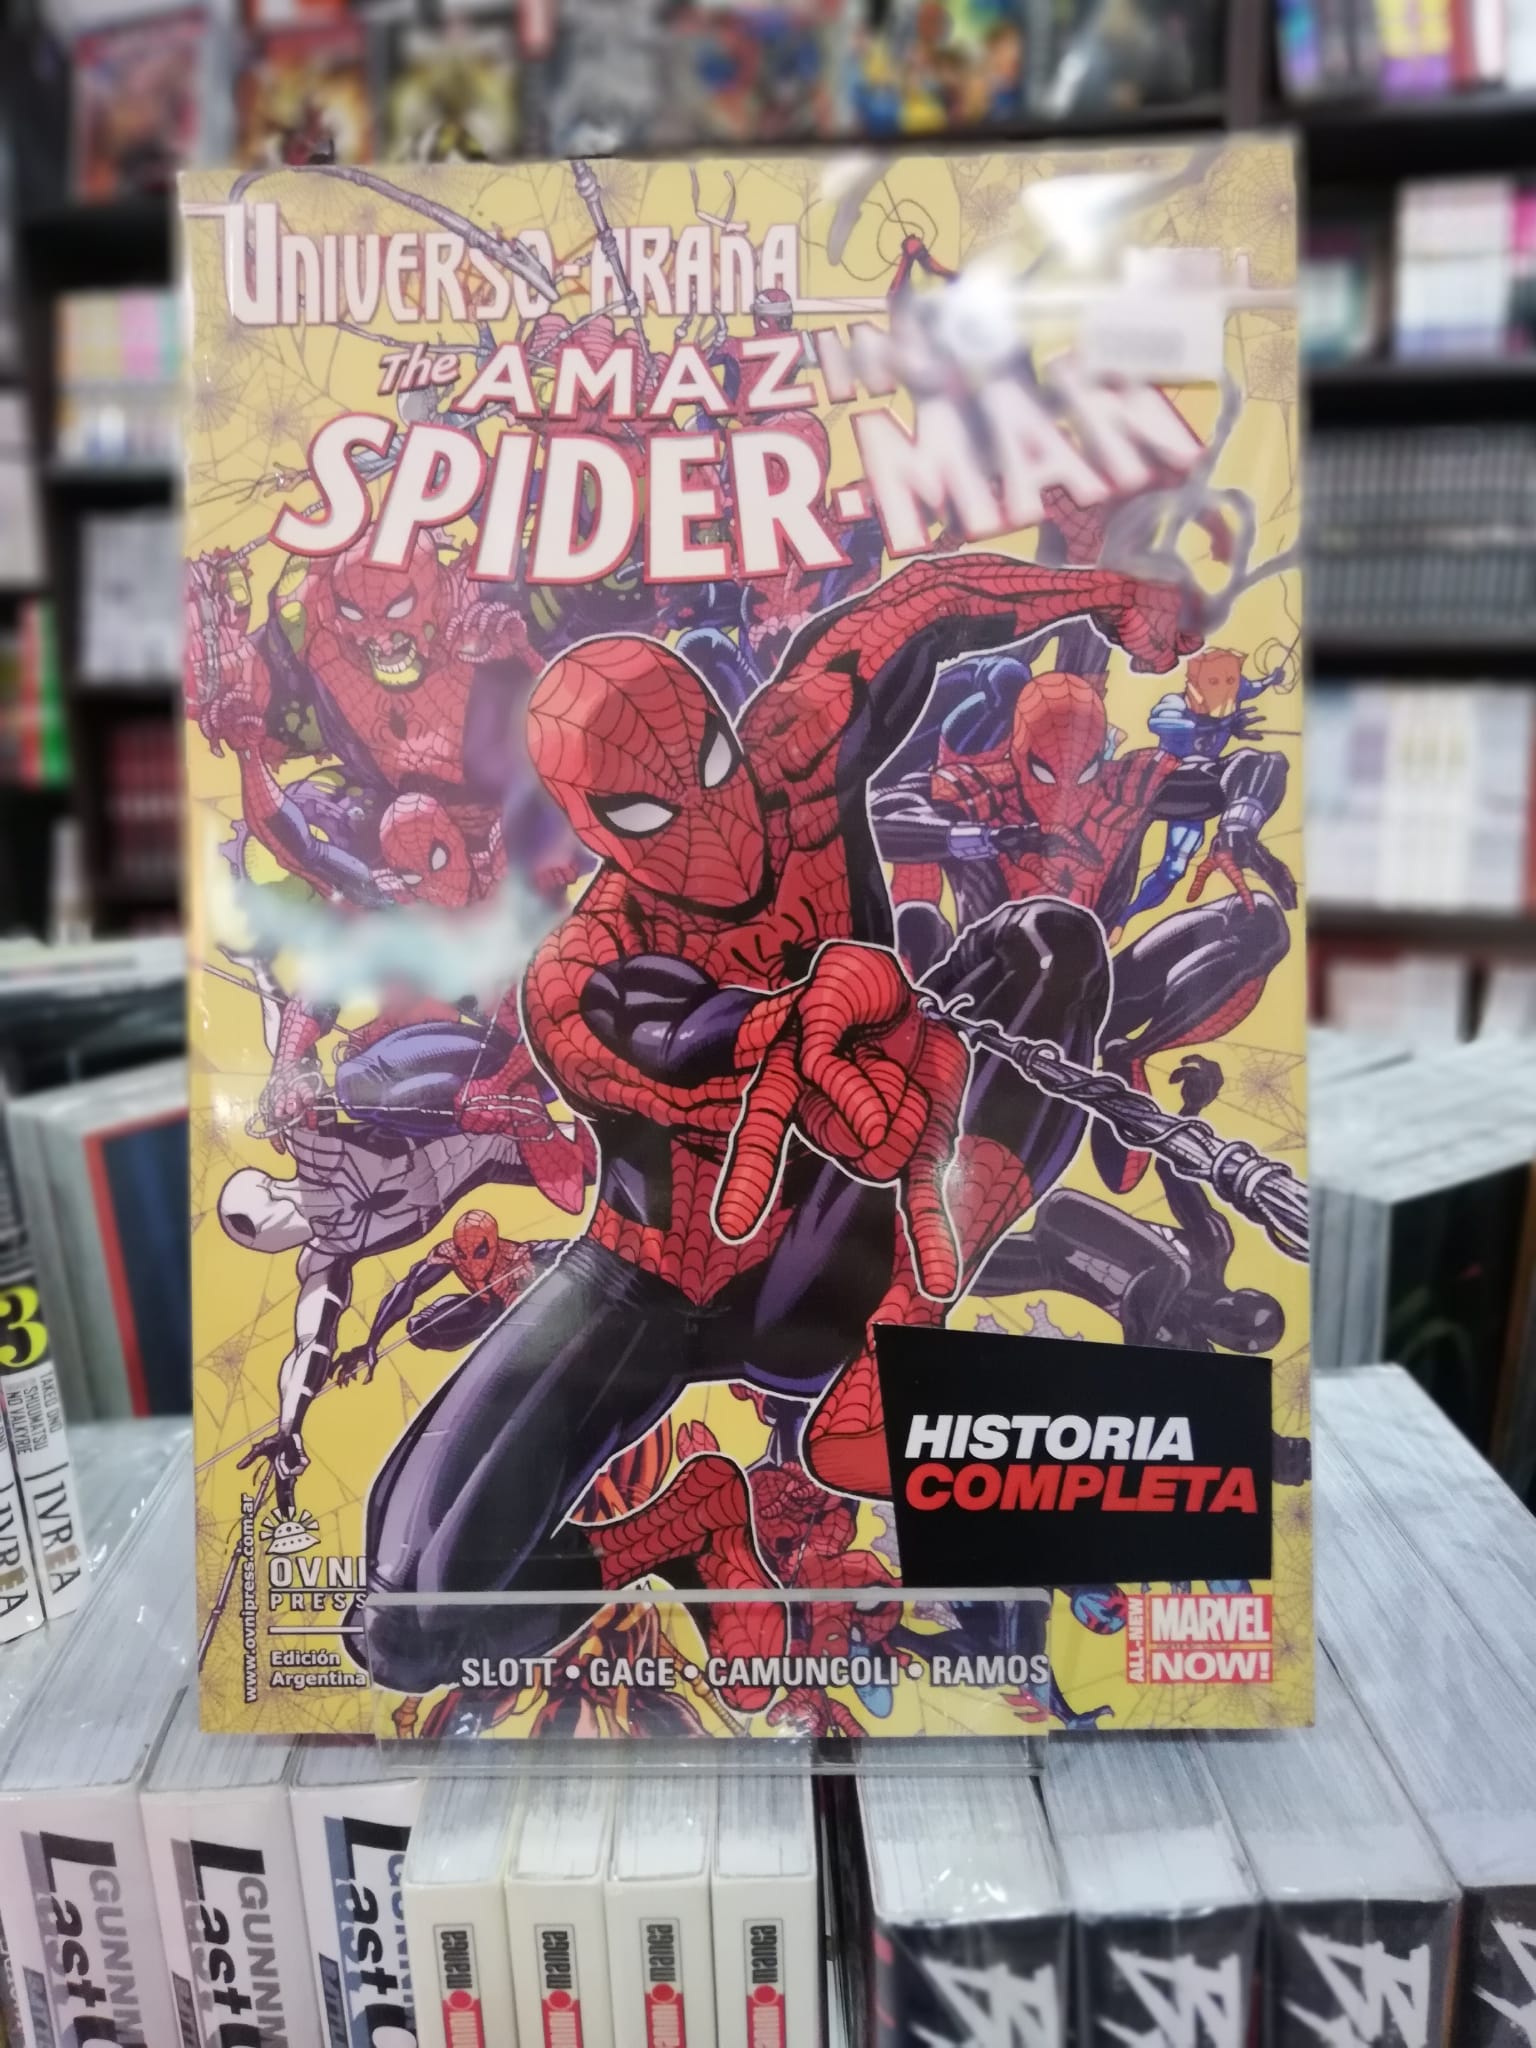 The Amazing Spider-Man: Universo Araña Pack Historia Completa (Parte 1 a Conclusión) OVNI Press ENcuadrocomics